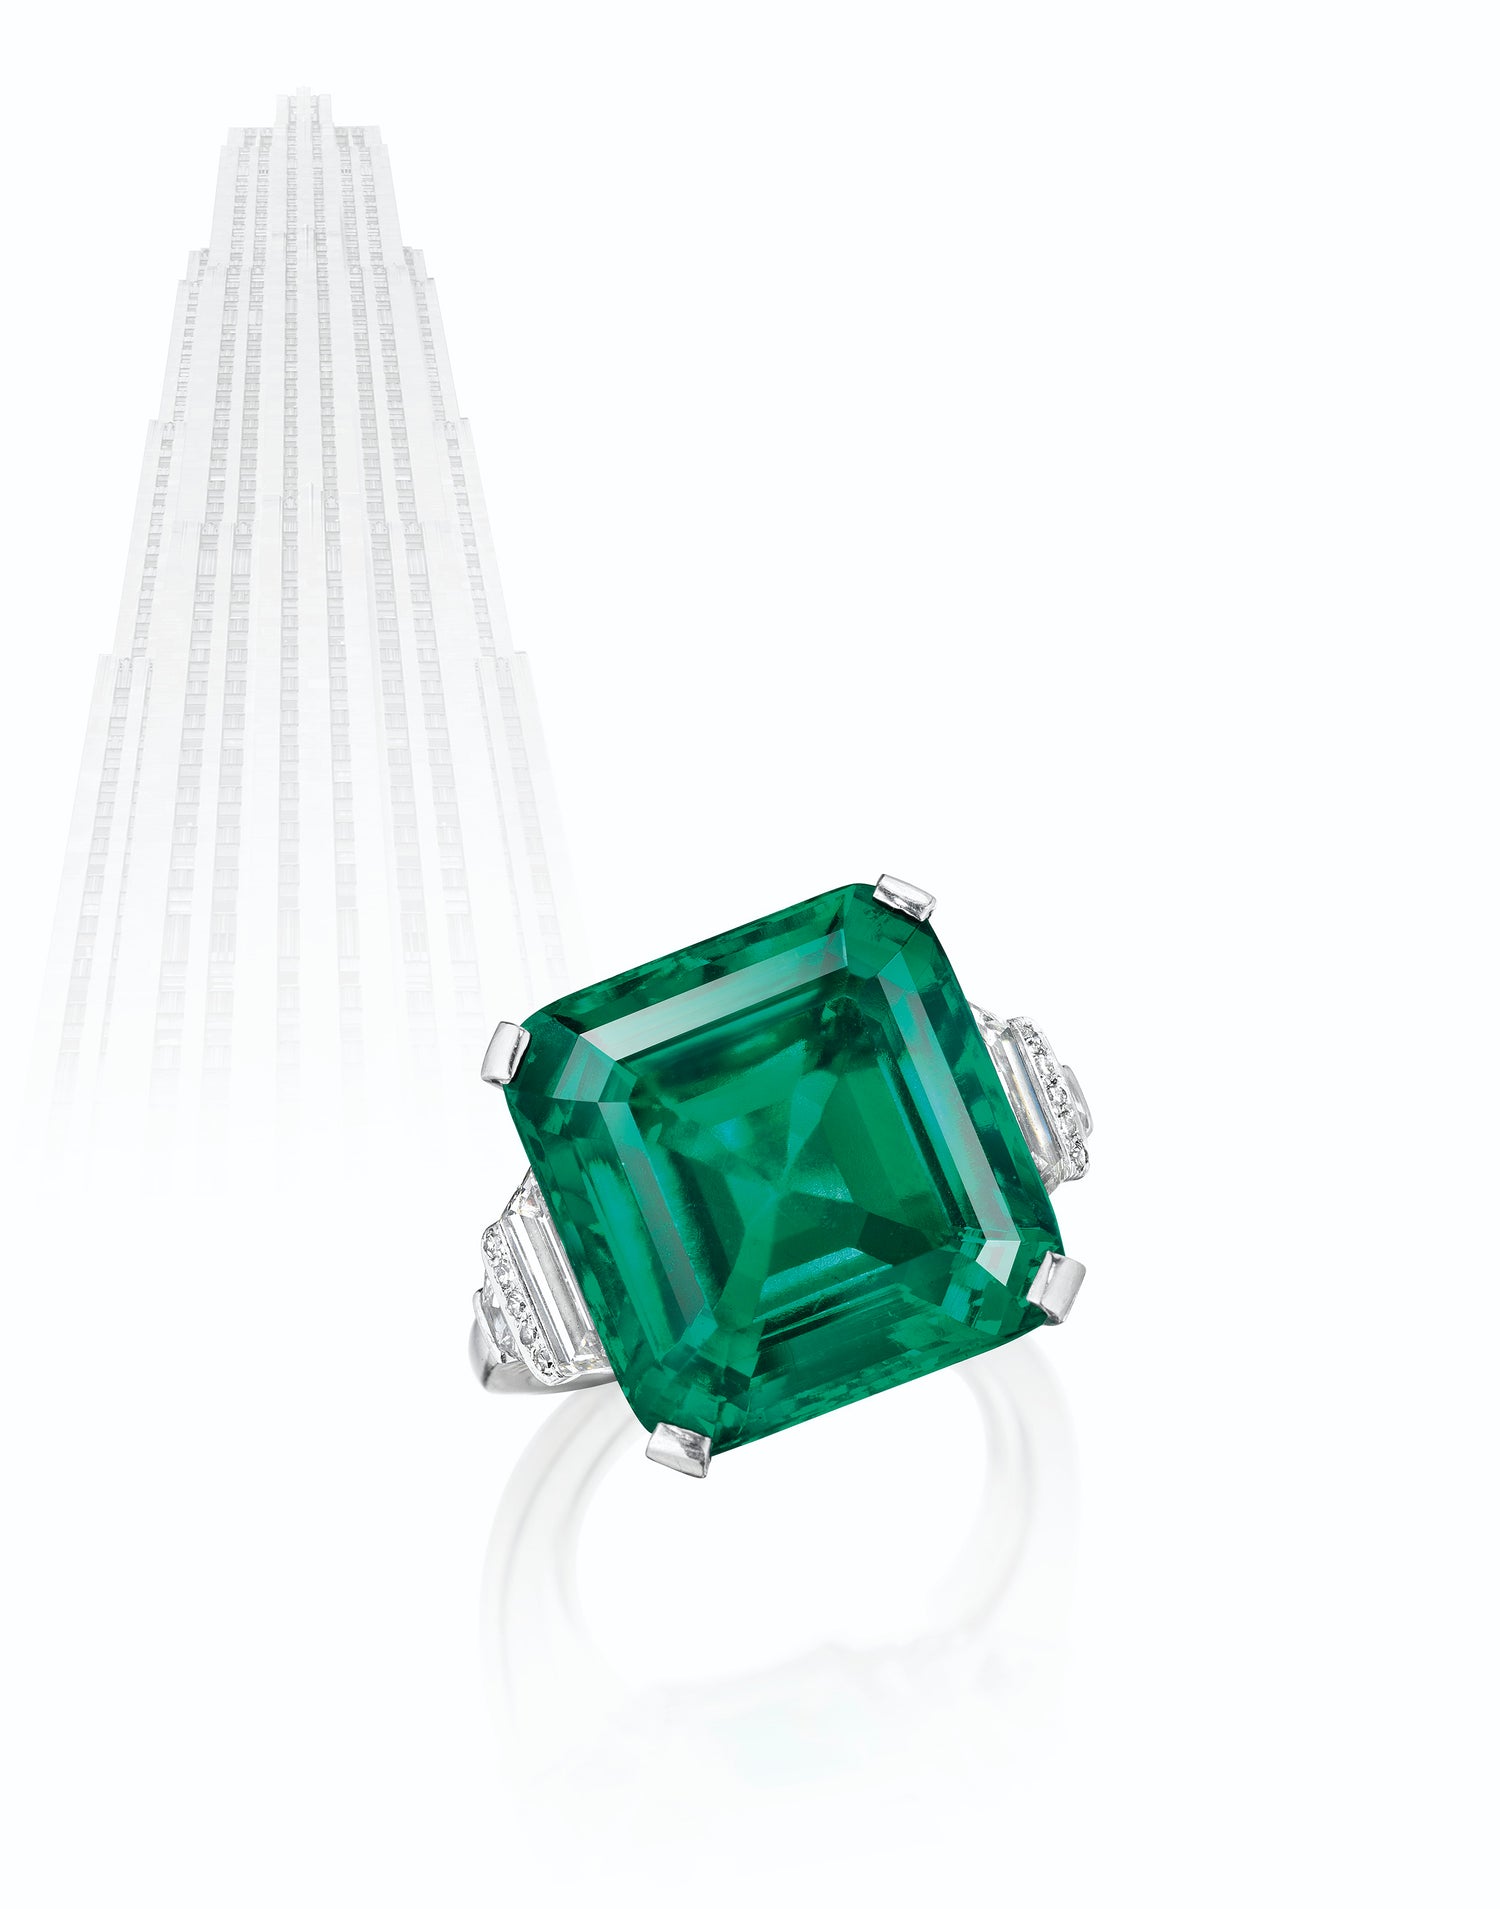 The 18.04-carat Rockefeller Emerald set in a ring